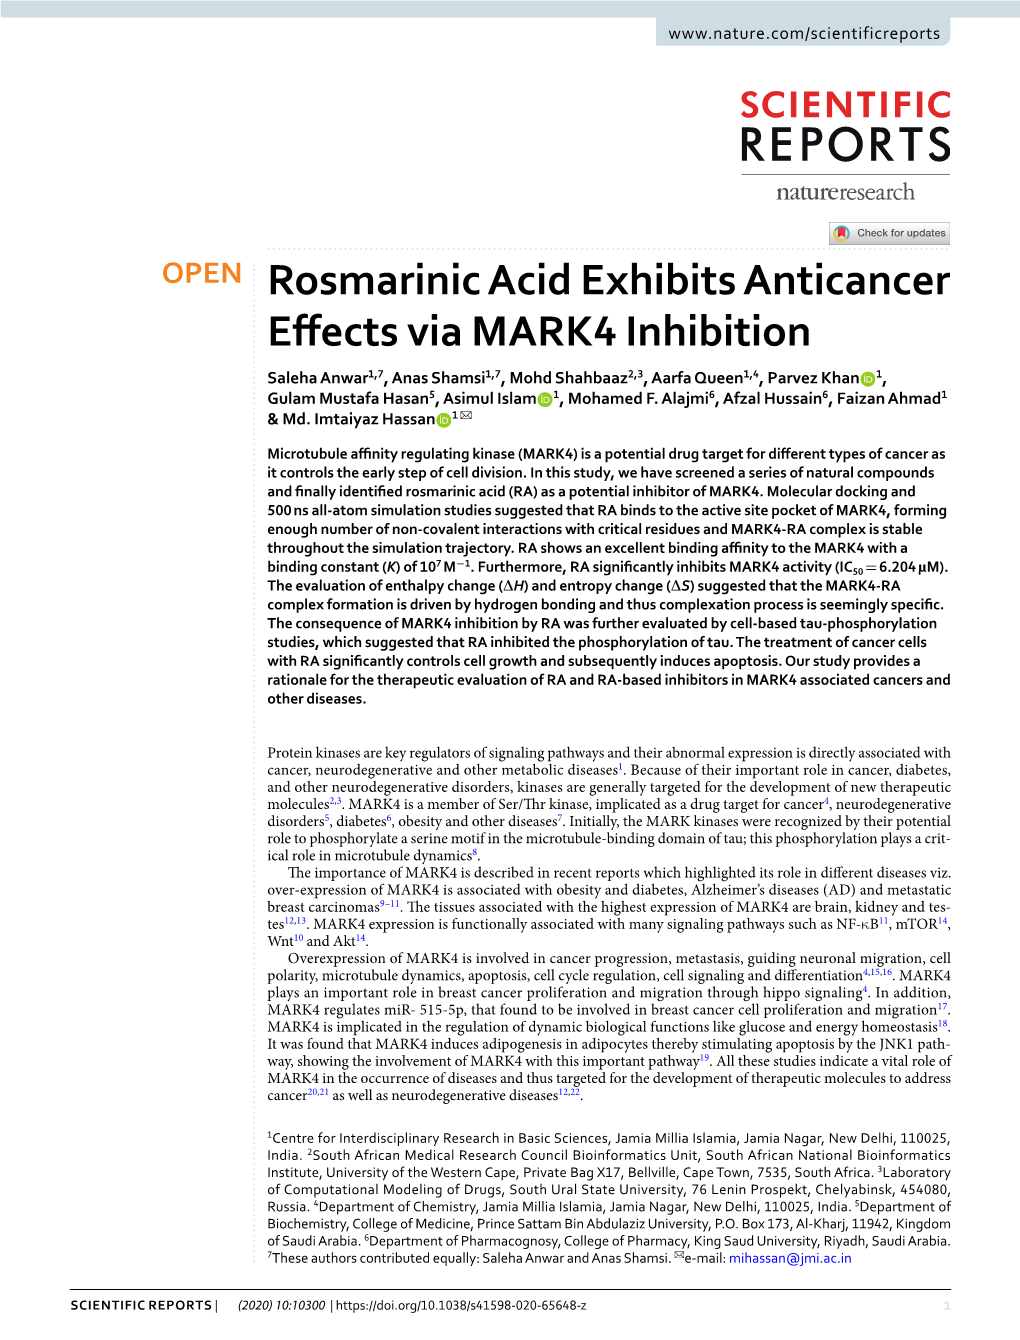 Rosmarinic Acid Exhibits Anticancer Effects Via MARK4 Inhibition